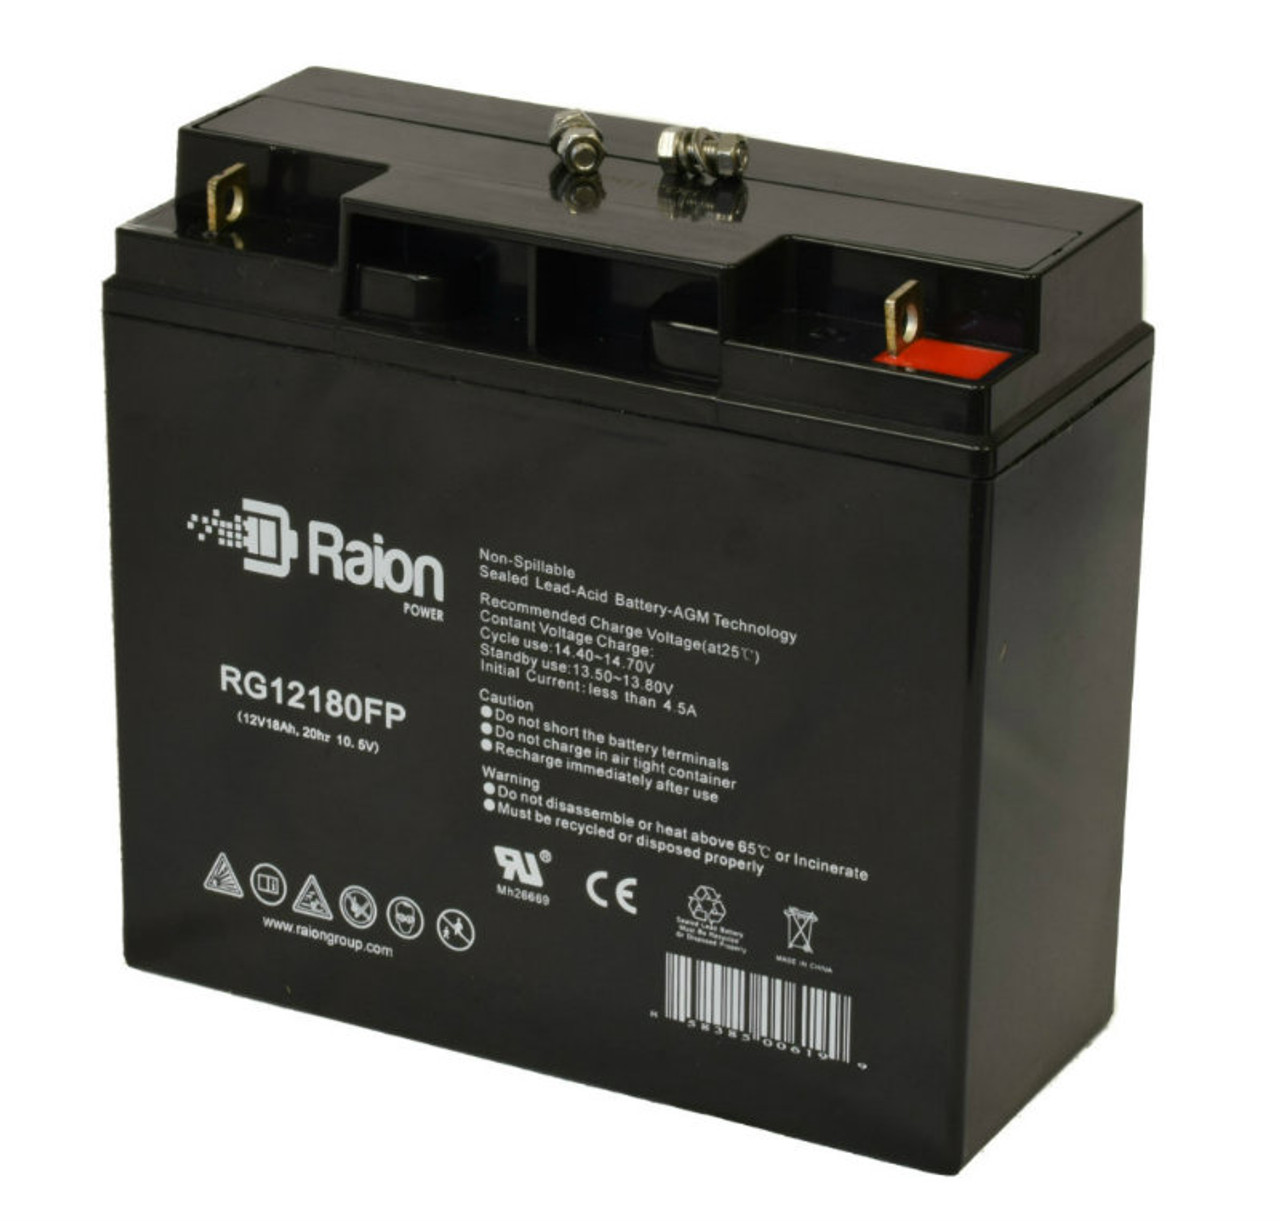 Raion Power RG12180FP 12V 18Ah Lead Acid Battery for Husky HSK012HD Jump Start System